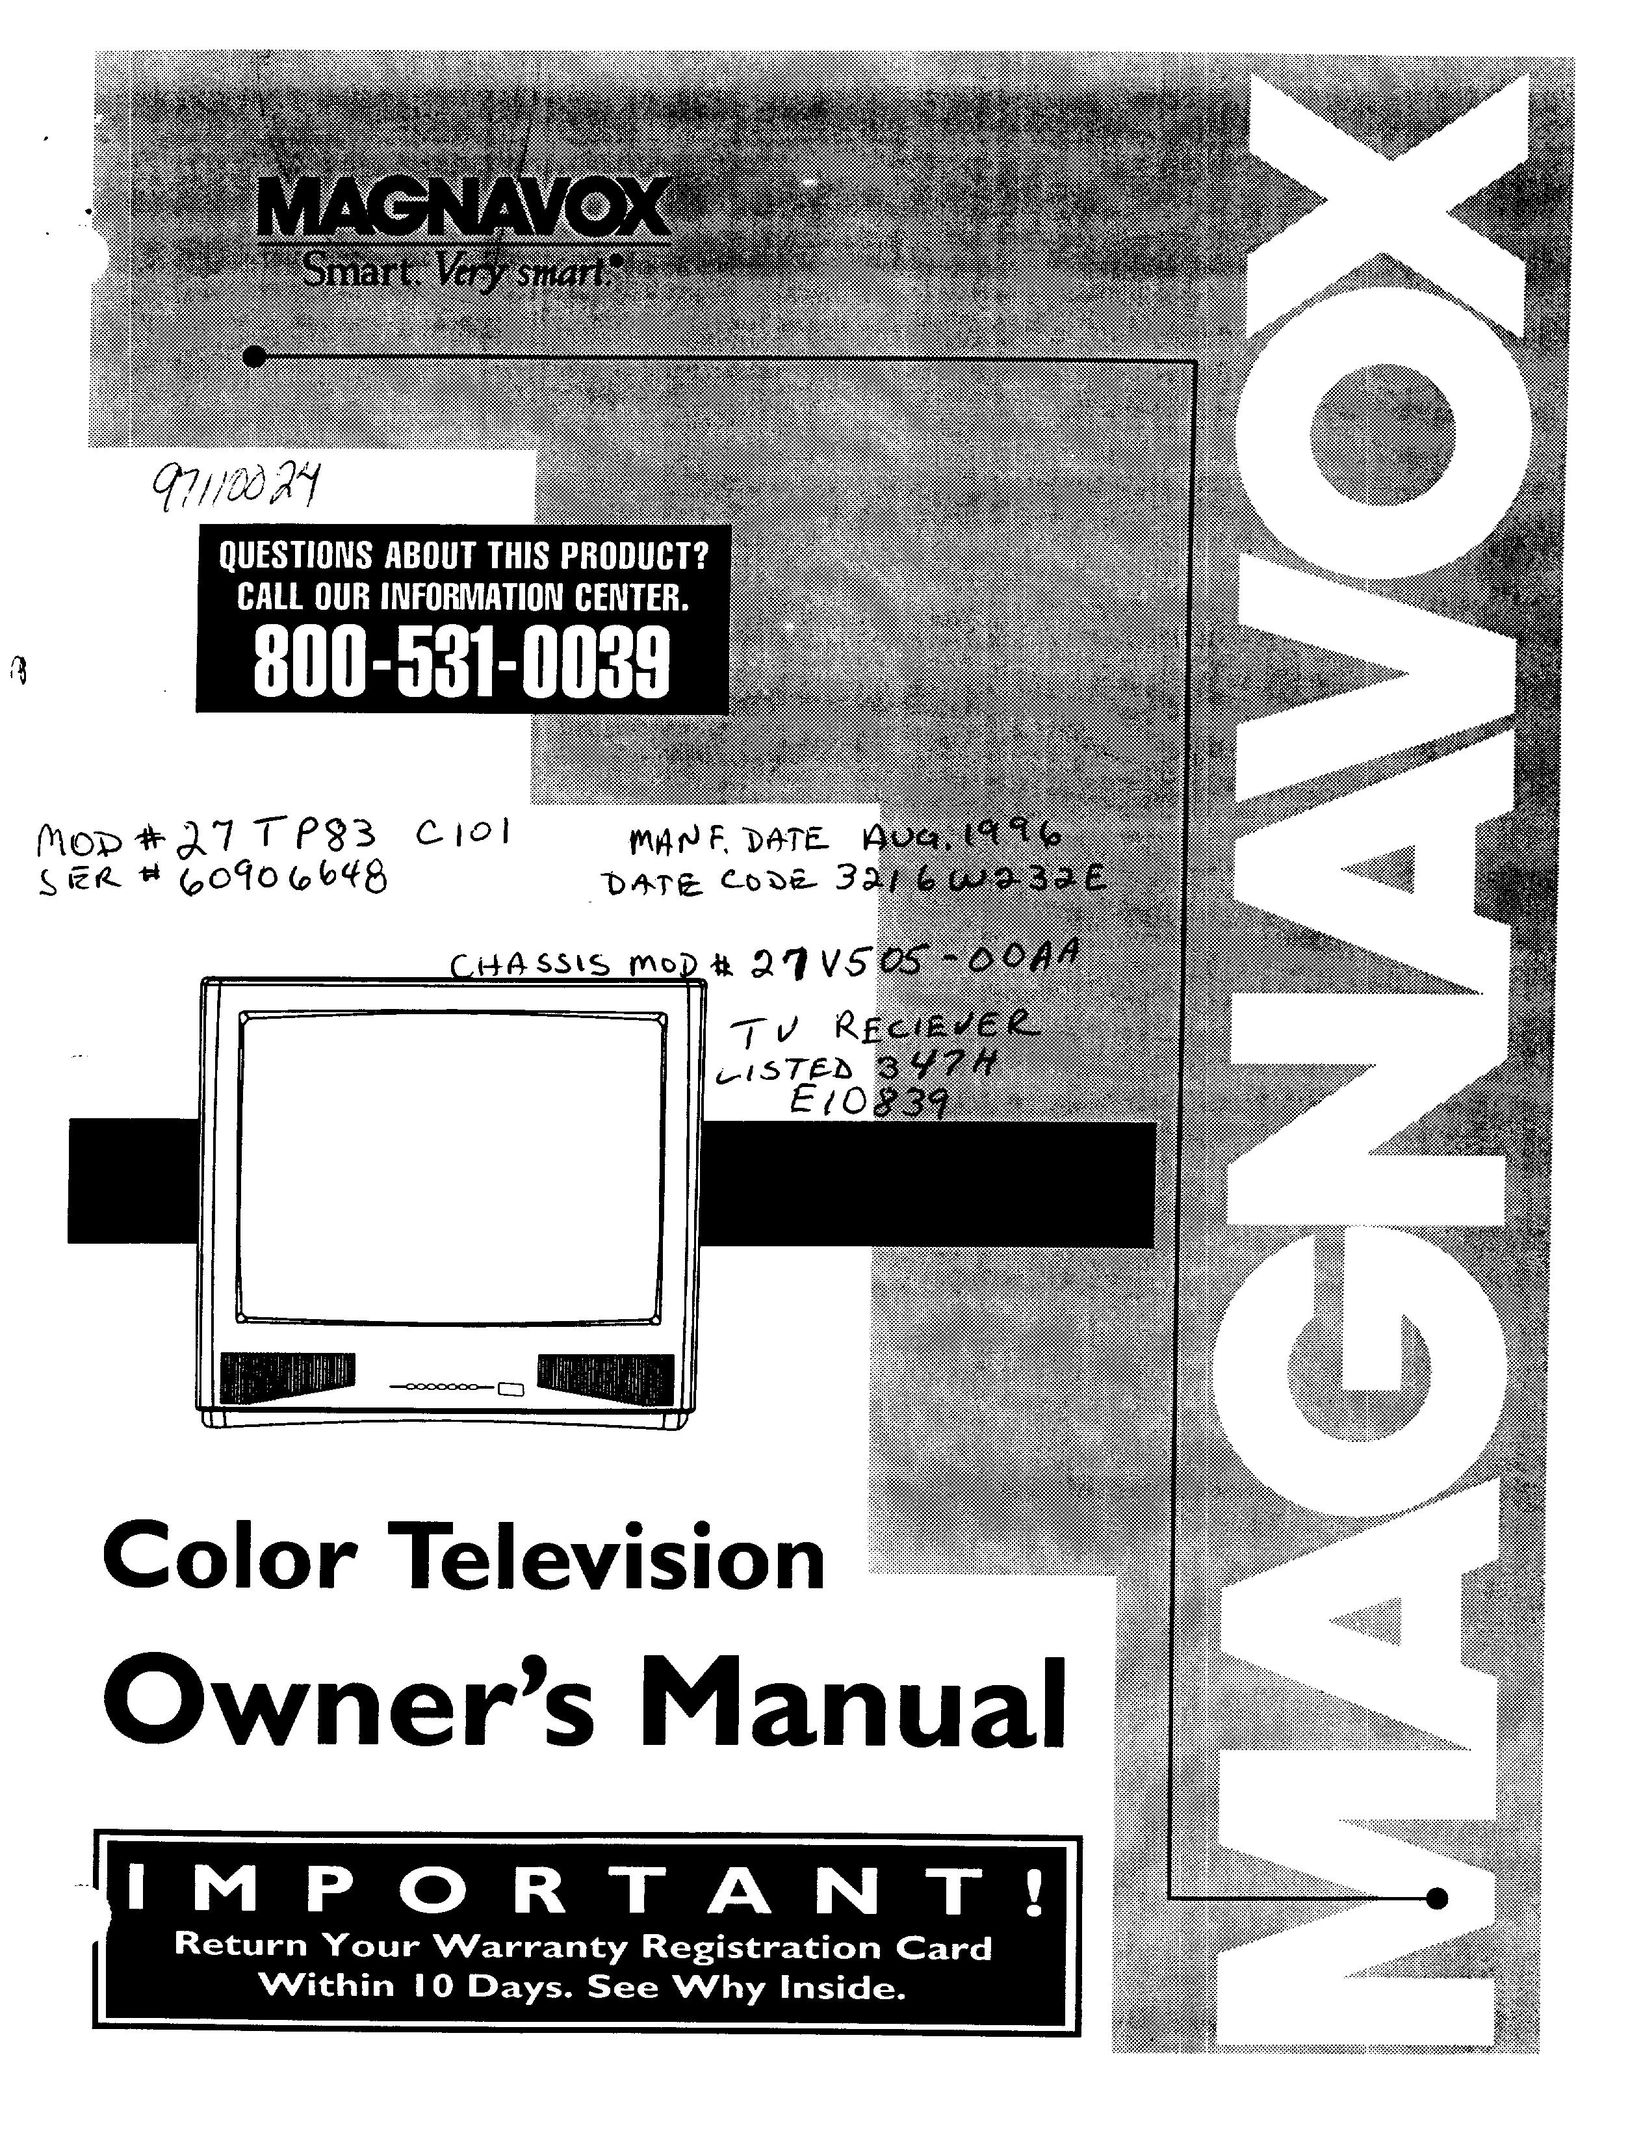 Magnavox 27TP83 C101 CRT Television User Manual